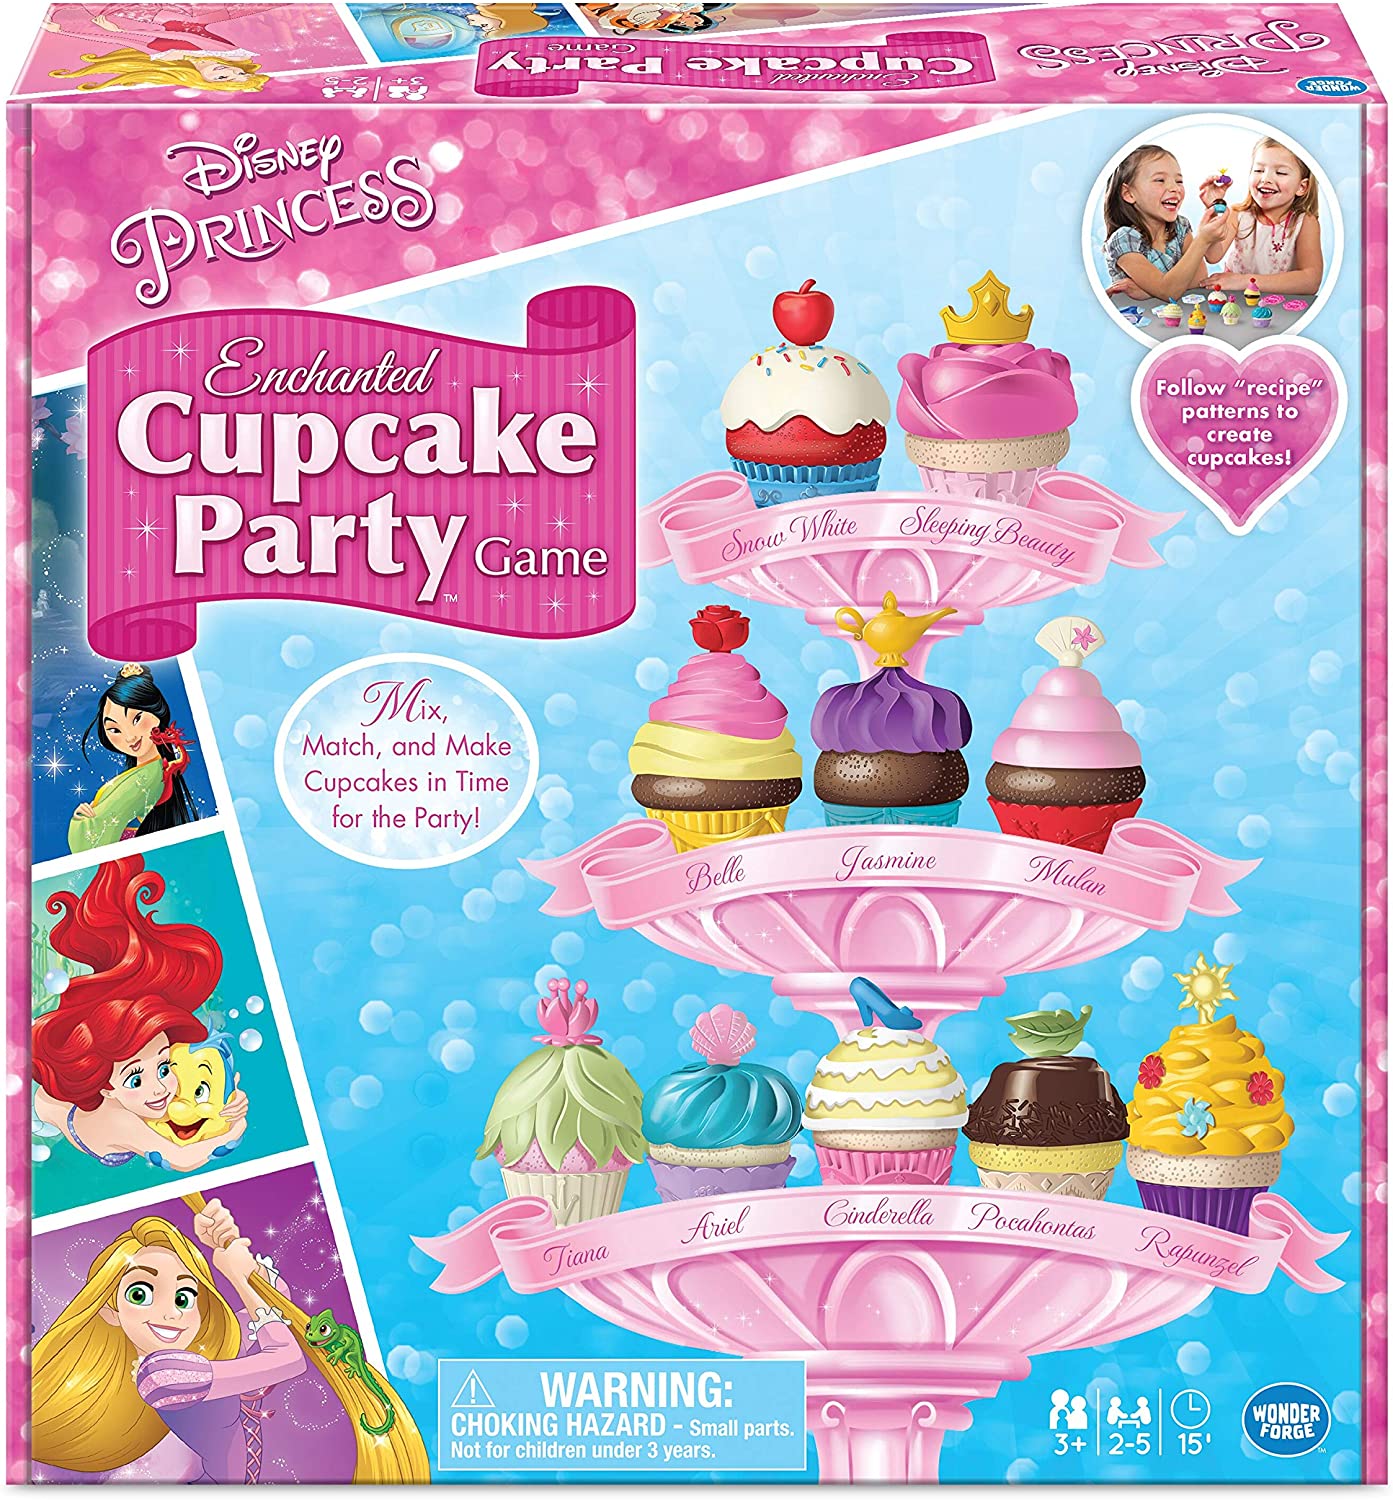 Wonder Forge Disney Princess Enchanted Cupcake Party Game For Girls & Boys Ag... 